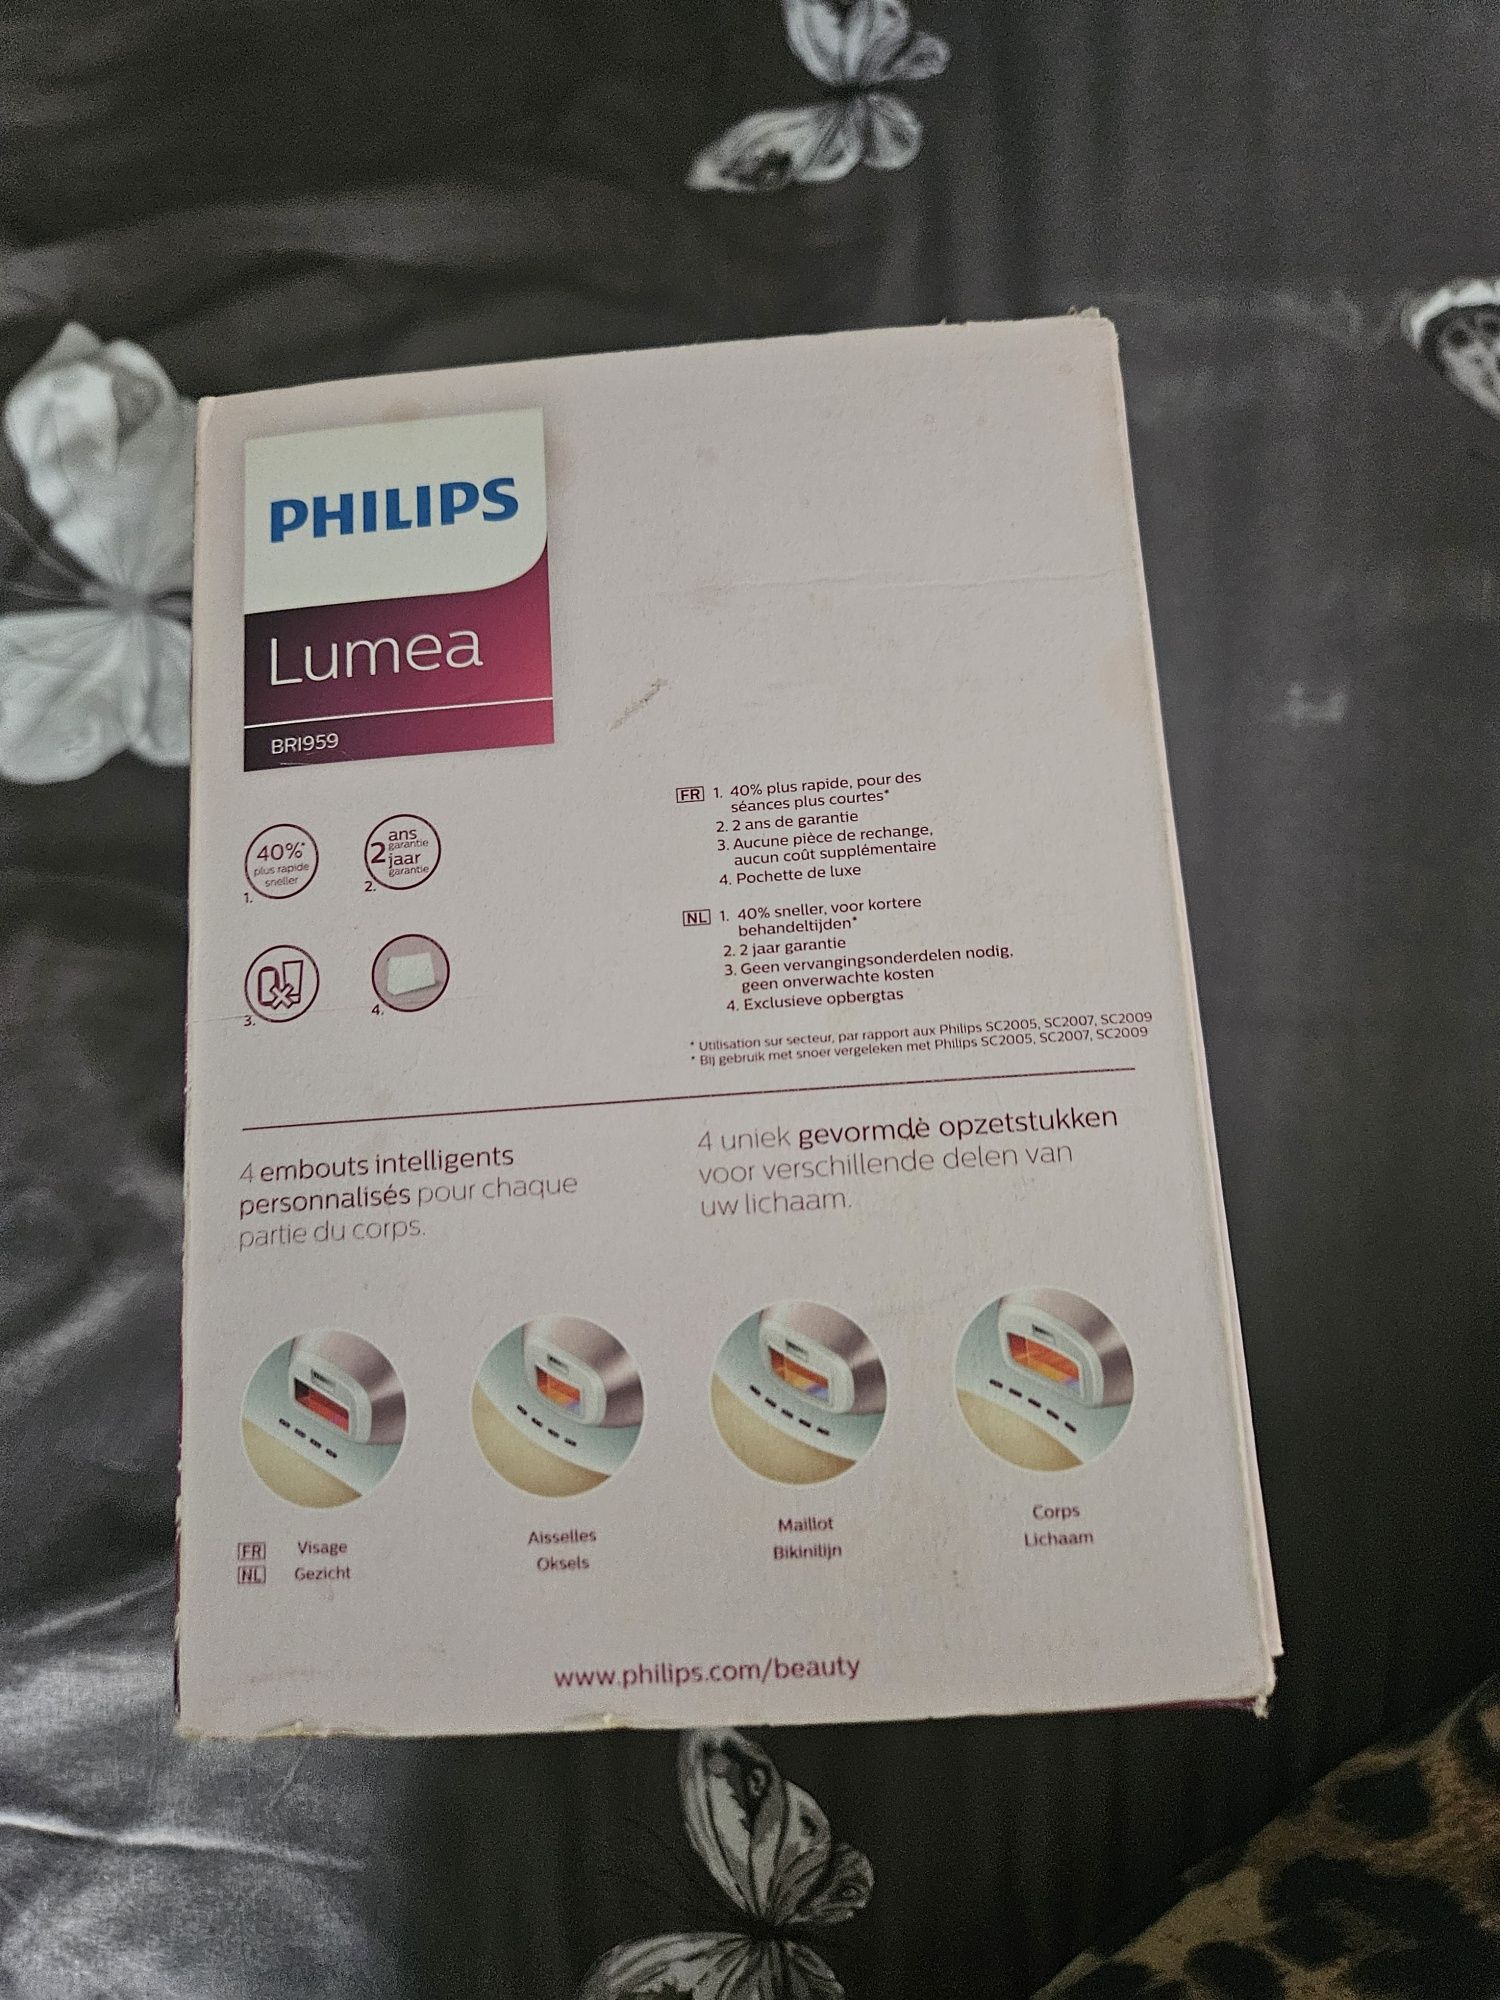 Philips Lumea Prestige BRI959